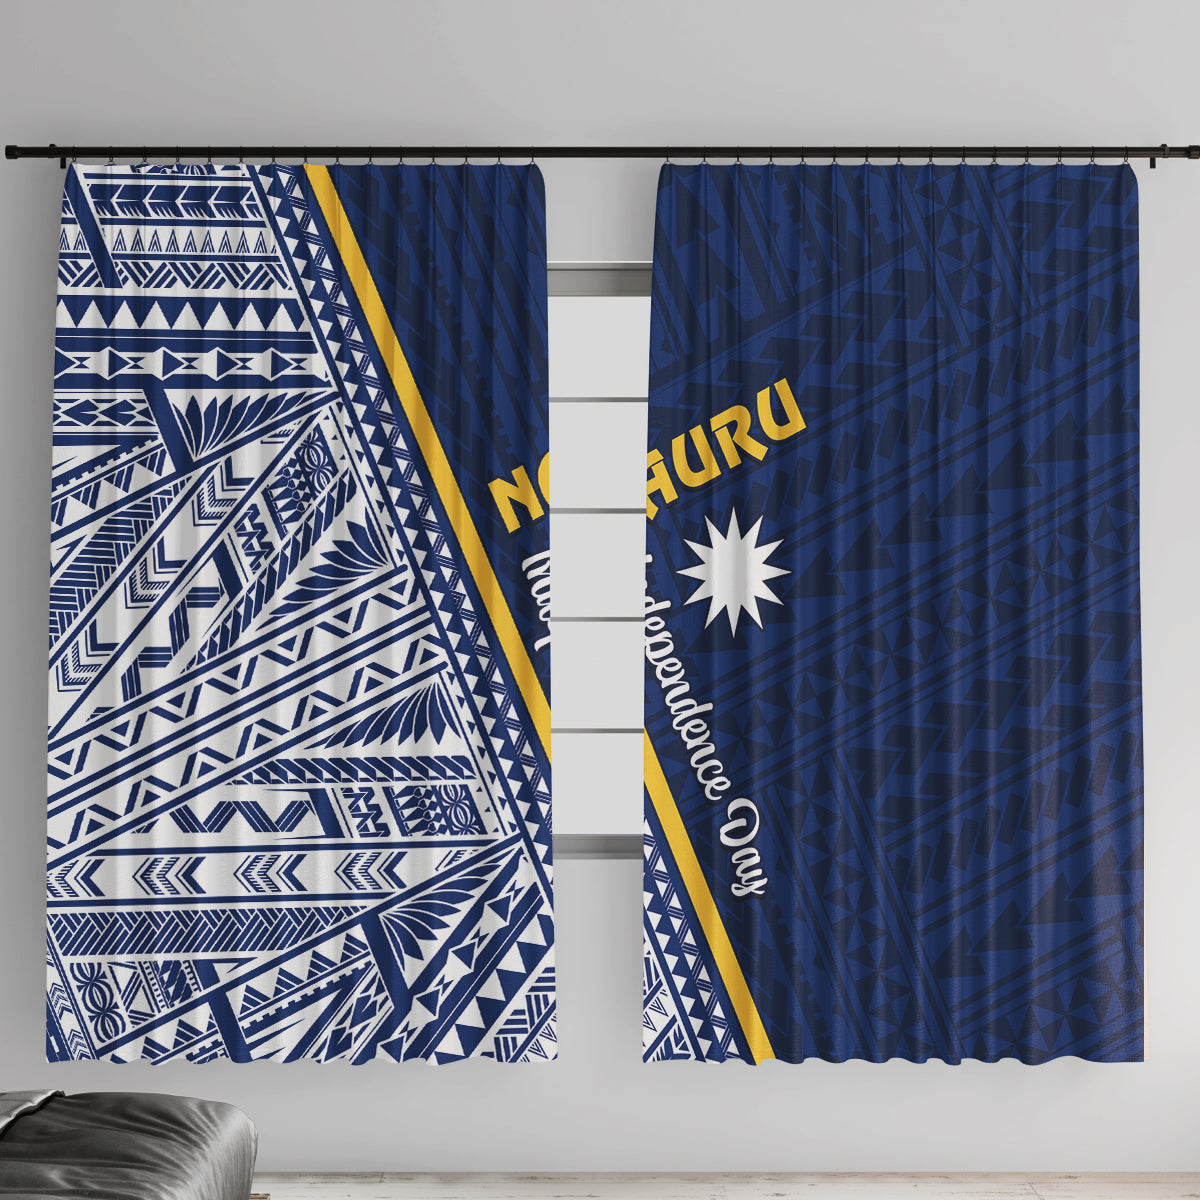 Nauru Independence Day Window Curtain Repubrikin Naoero Gods Will First LT01 With Hooks Blue - Polynesian Pride